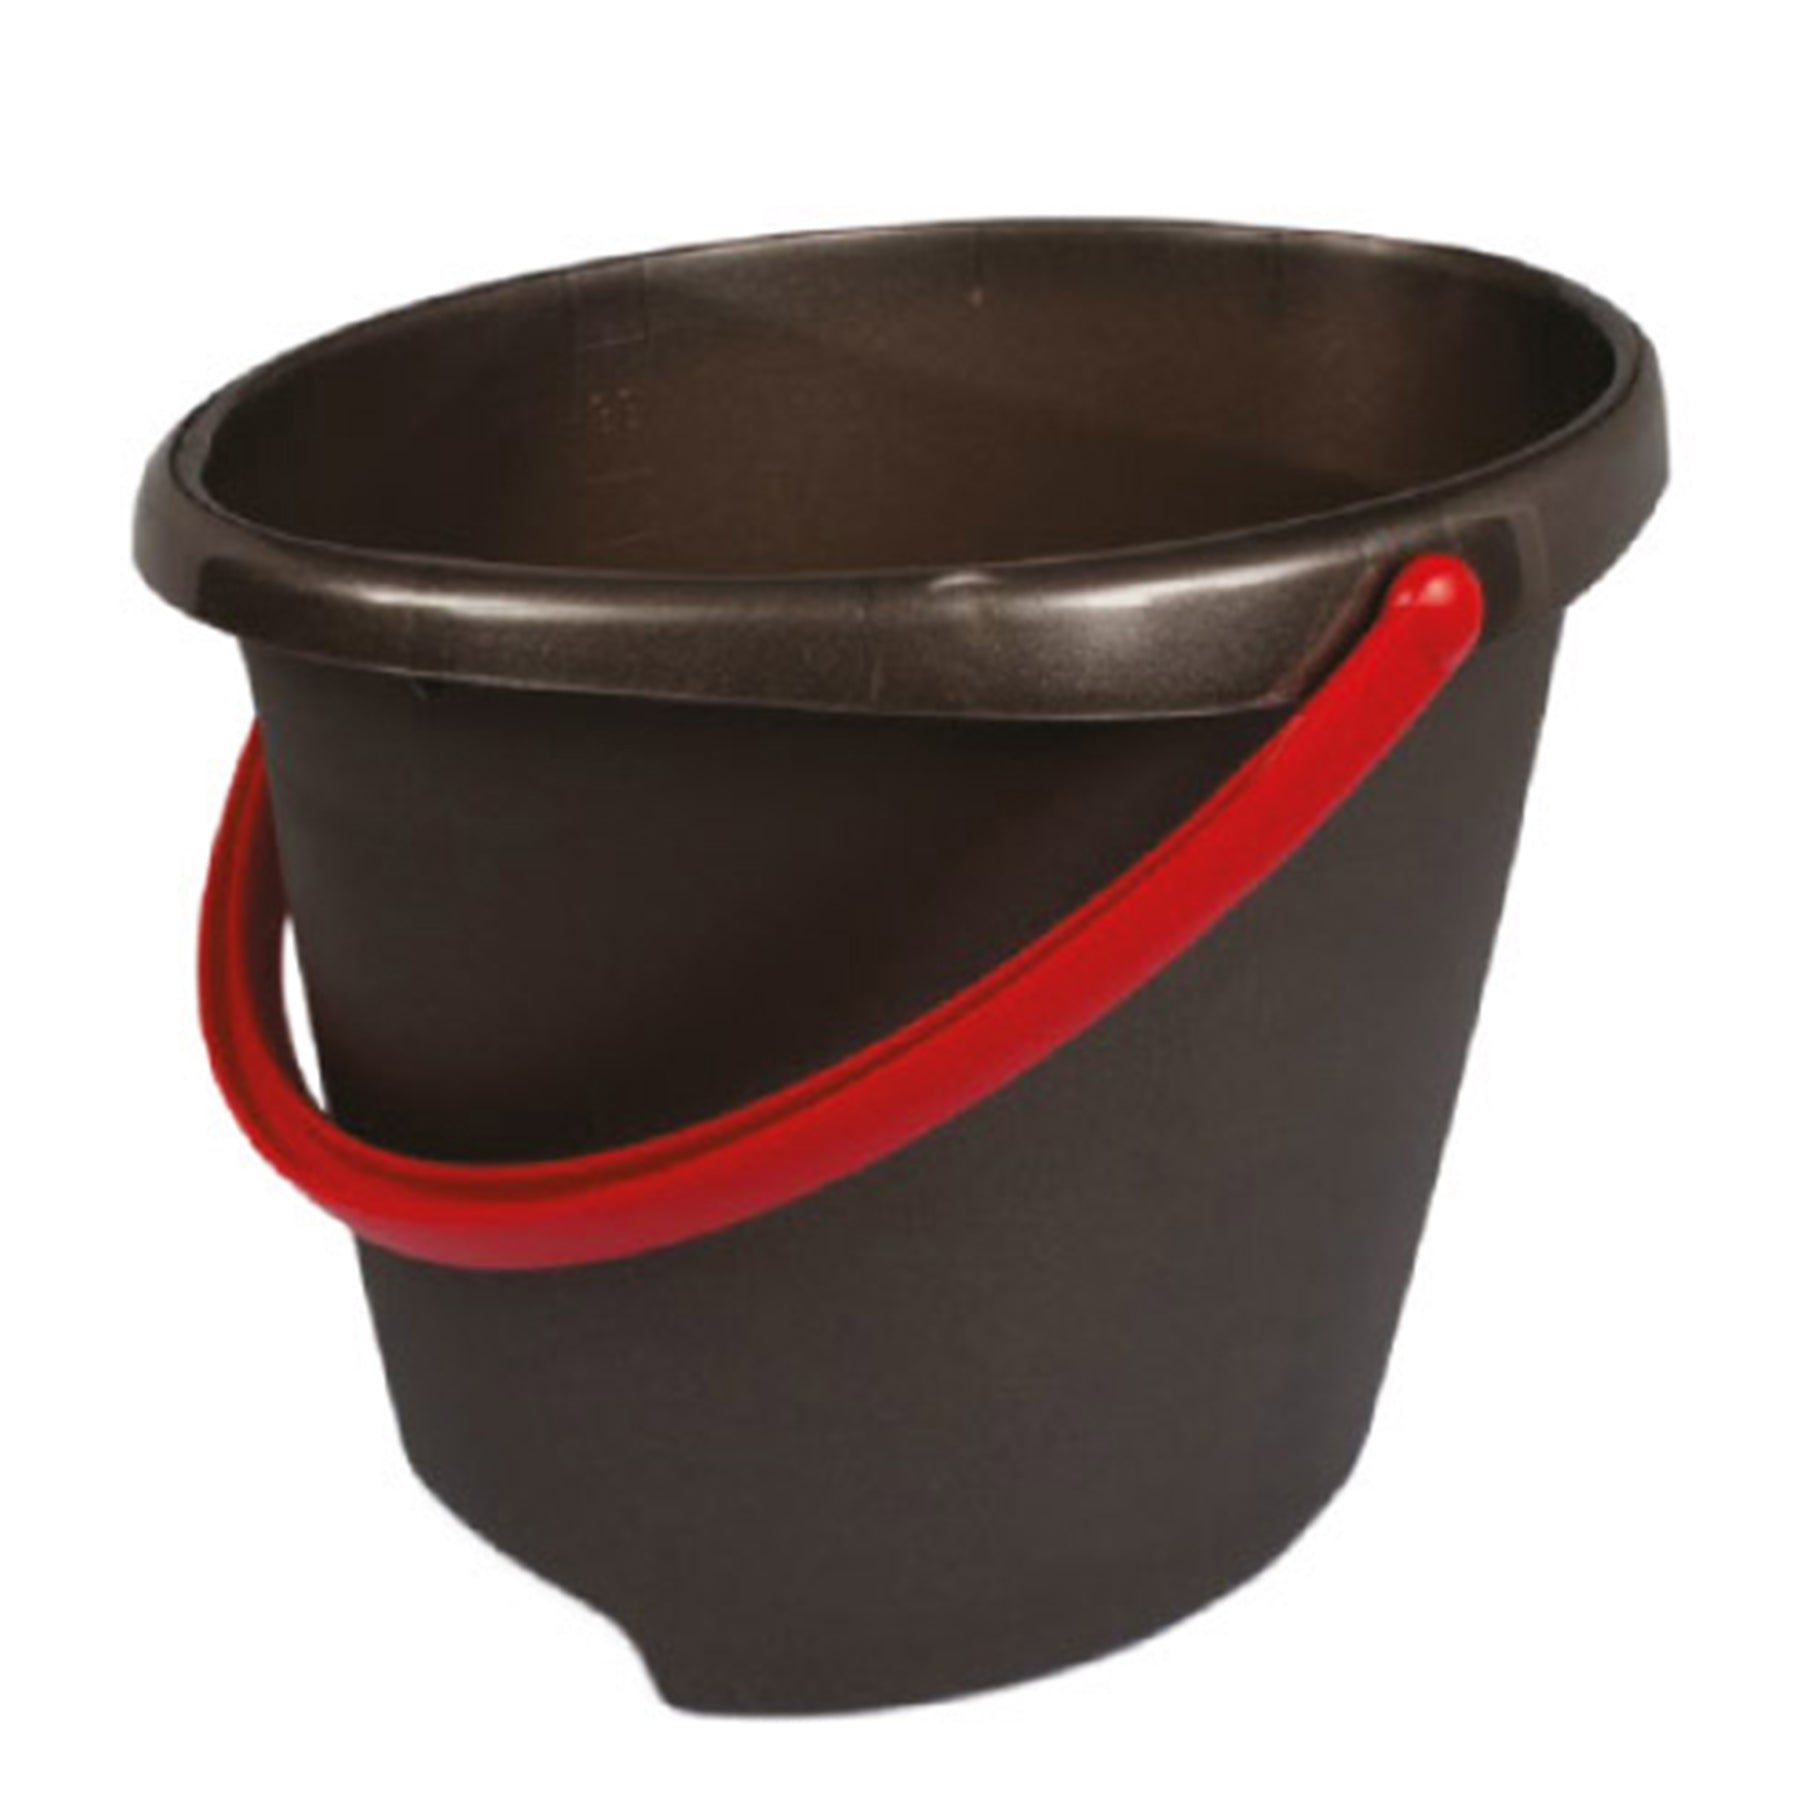 Oval Bucket- 13 LiterCapacity: 13 Liter